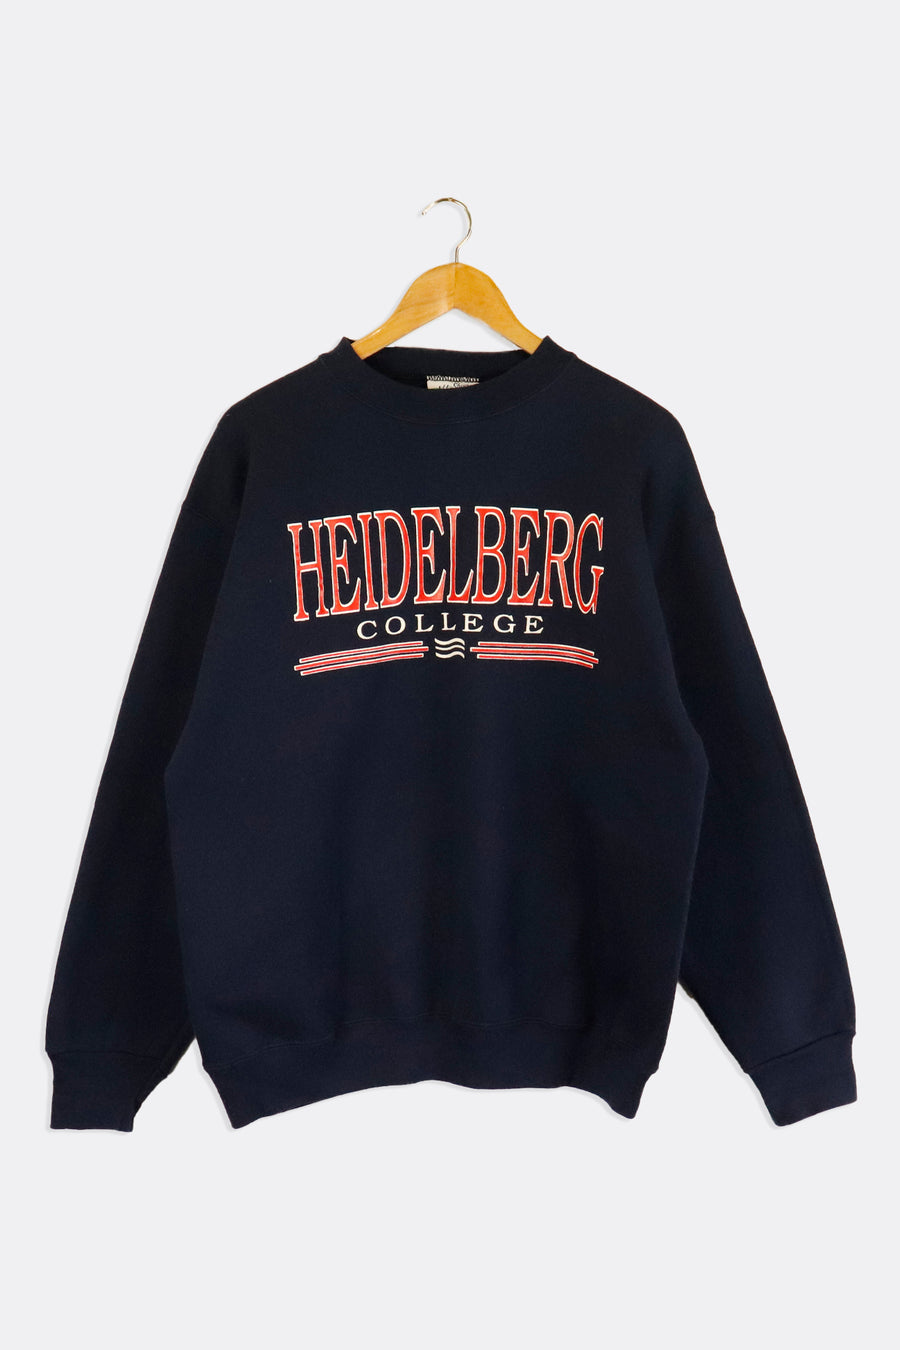 Vintage Heidelberg College Thin Style Font Three Underlines Vinyl Sweatshirt Sz L